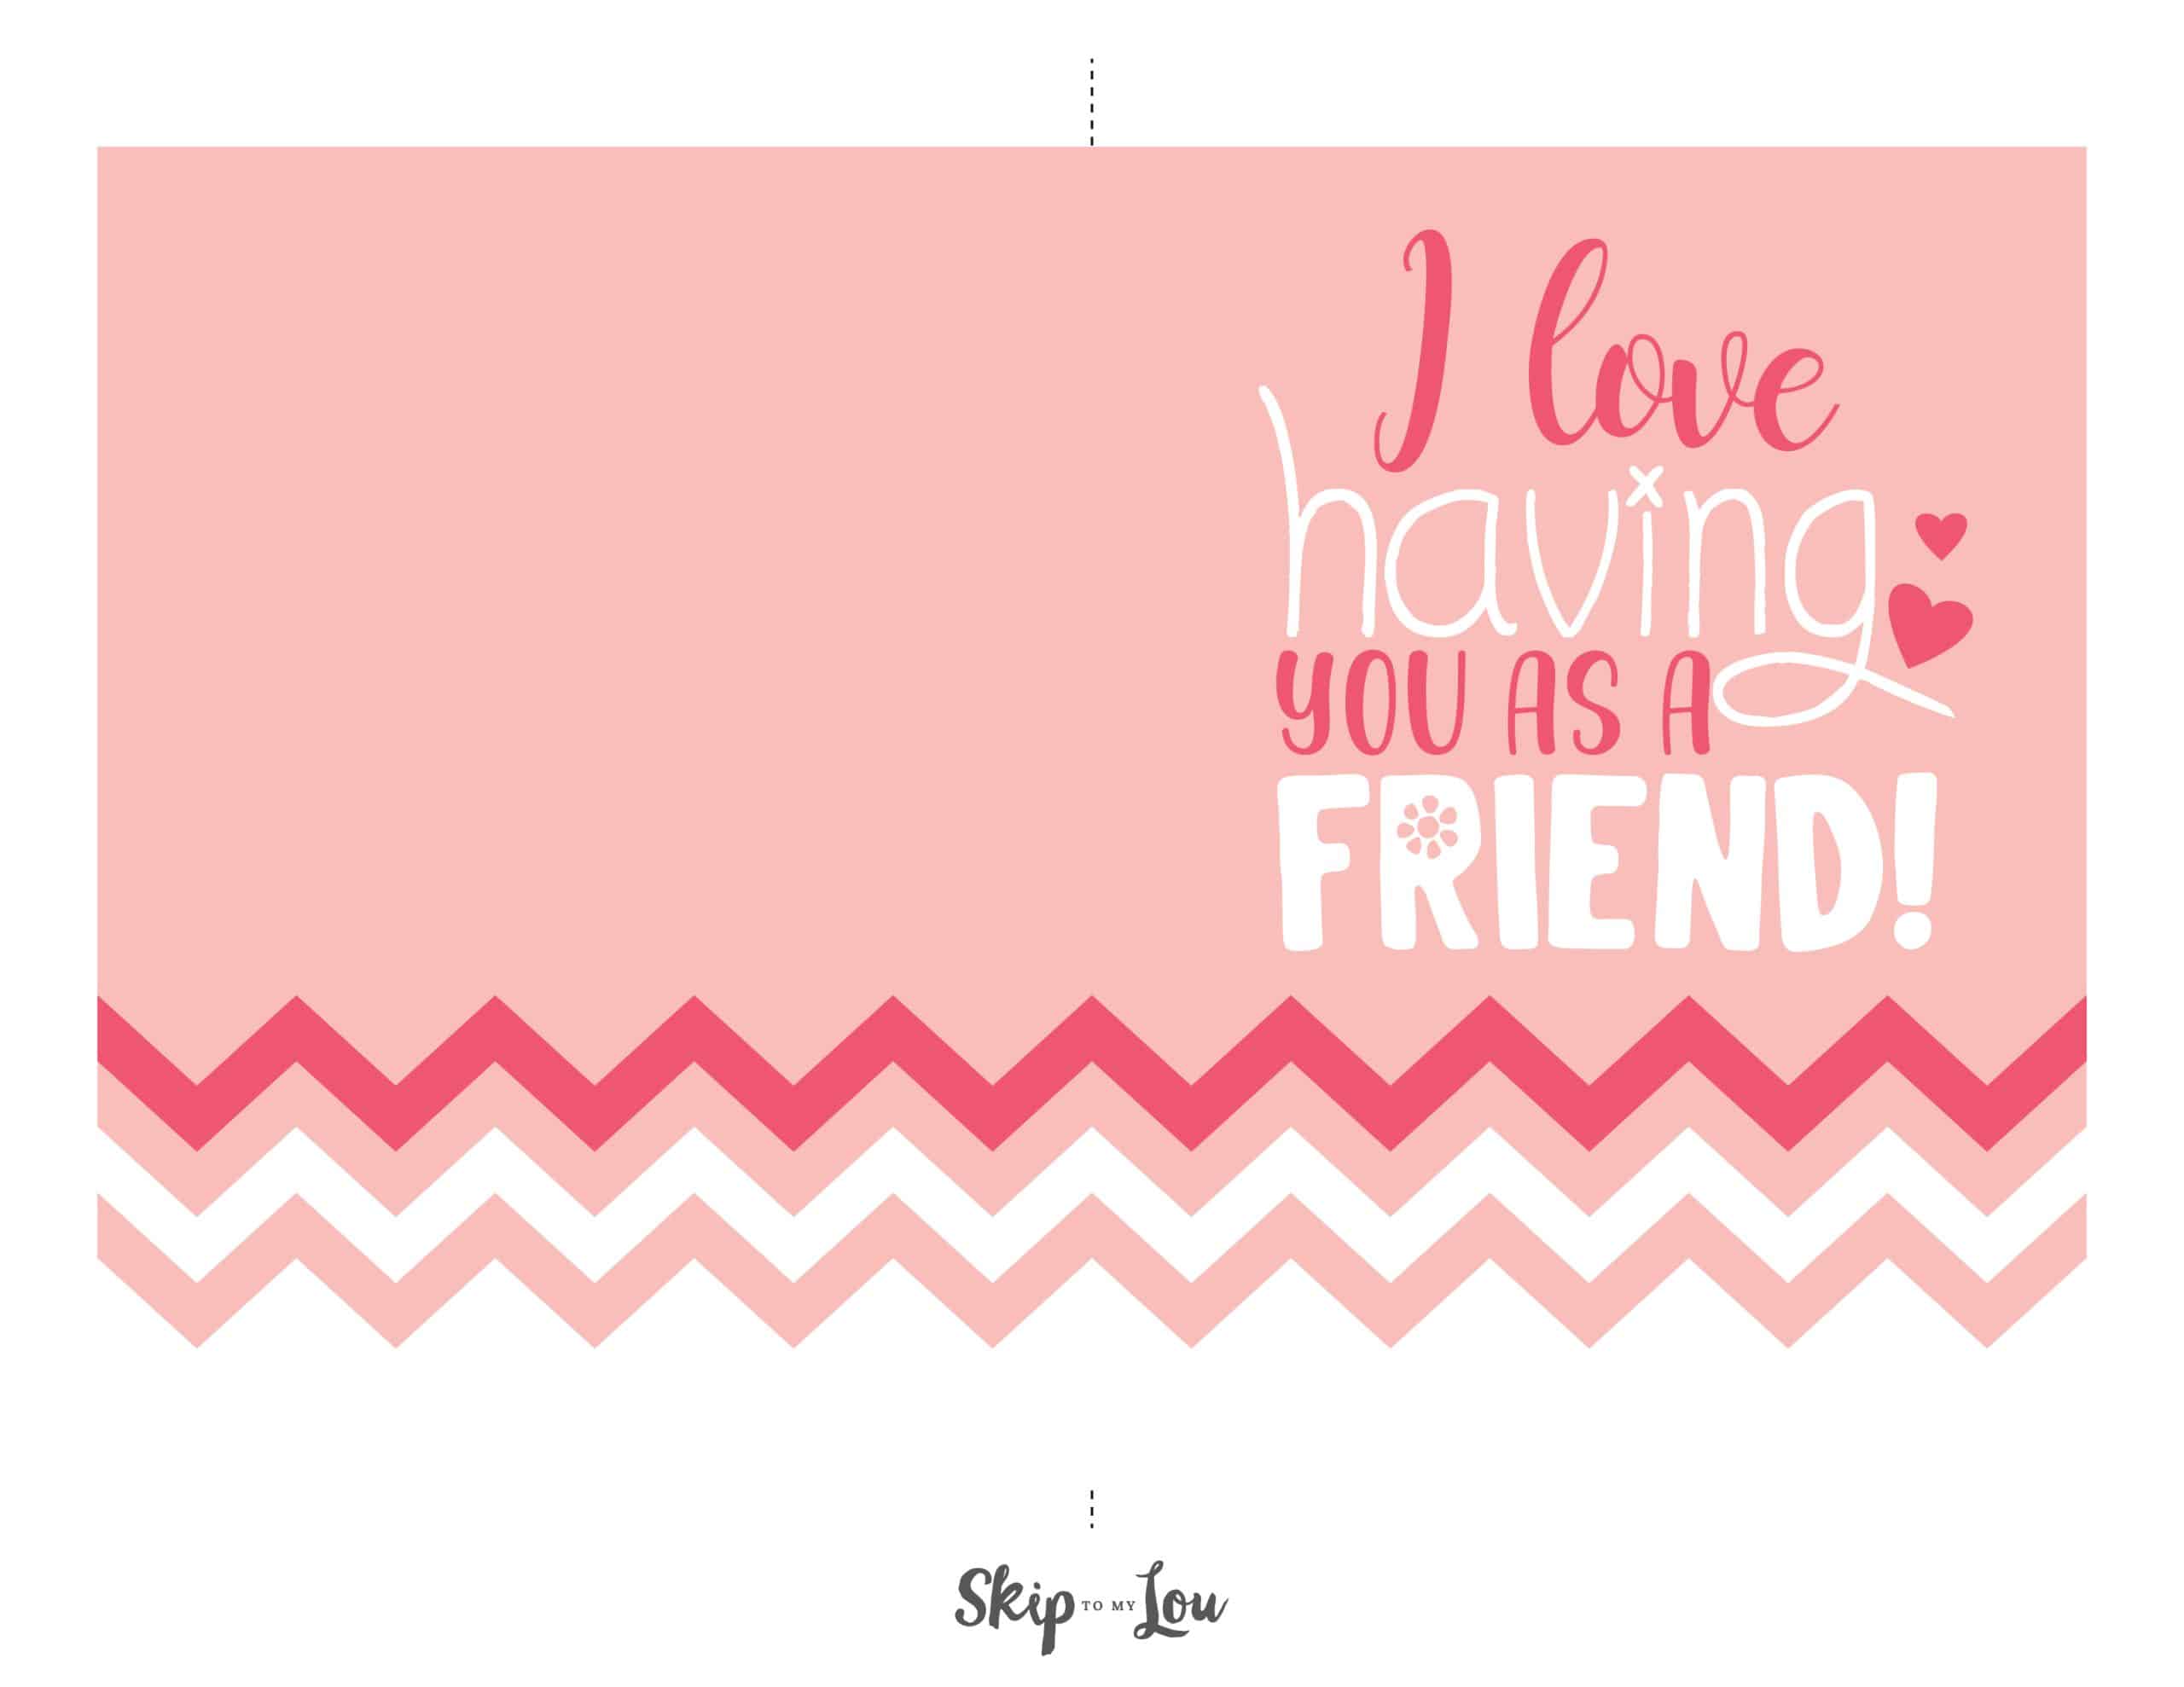 Happy Valentine's day friend card - I love having you as a friend - Skip to my lou.